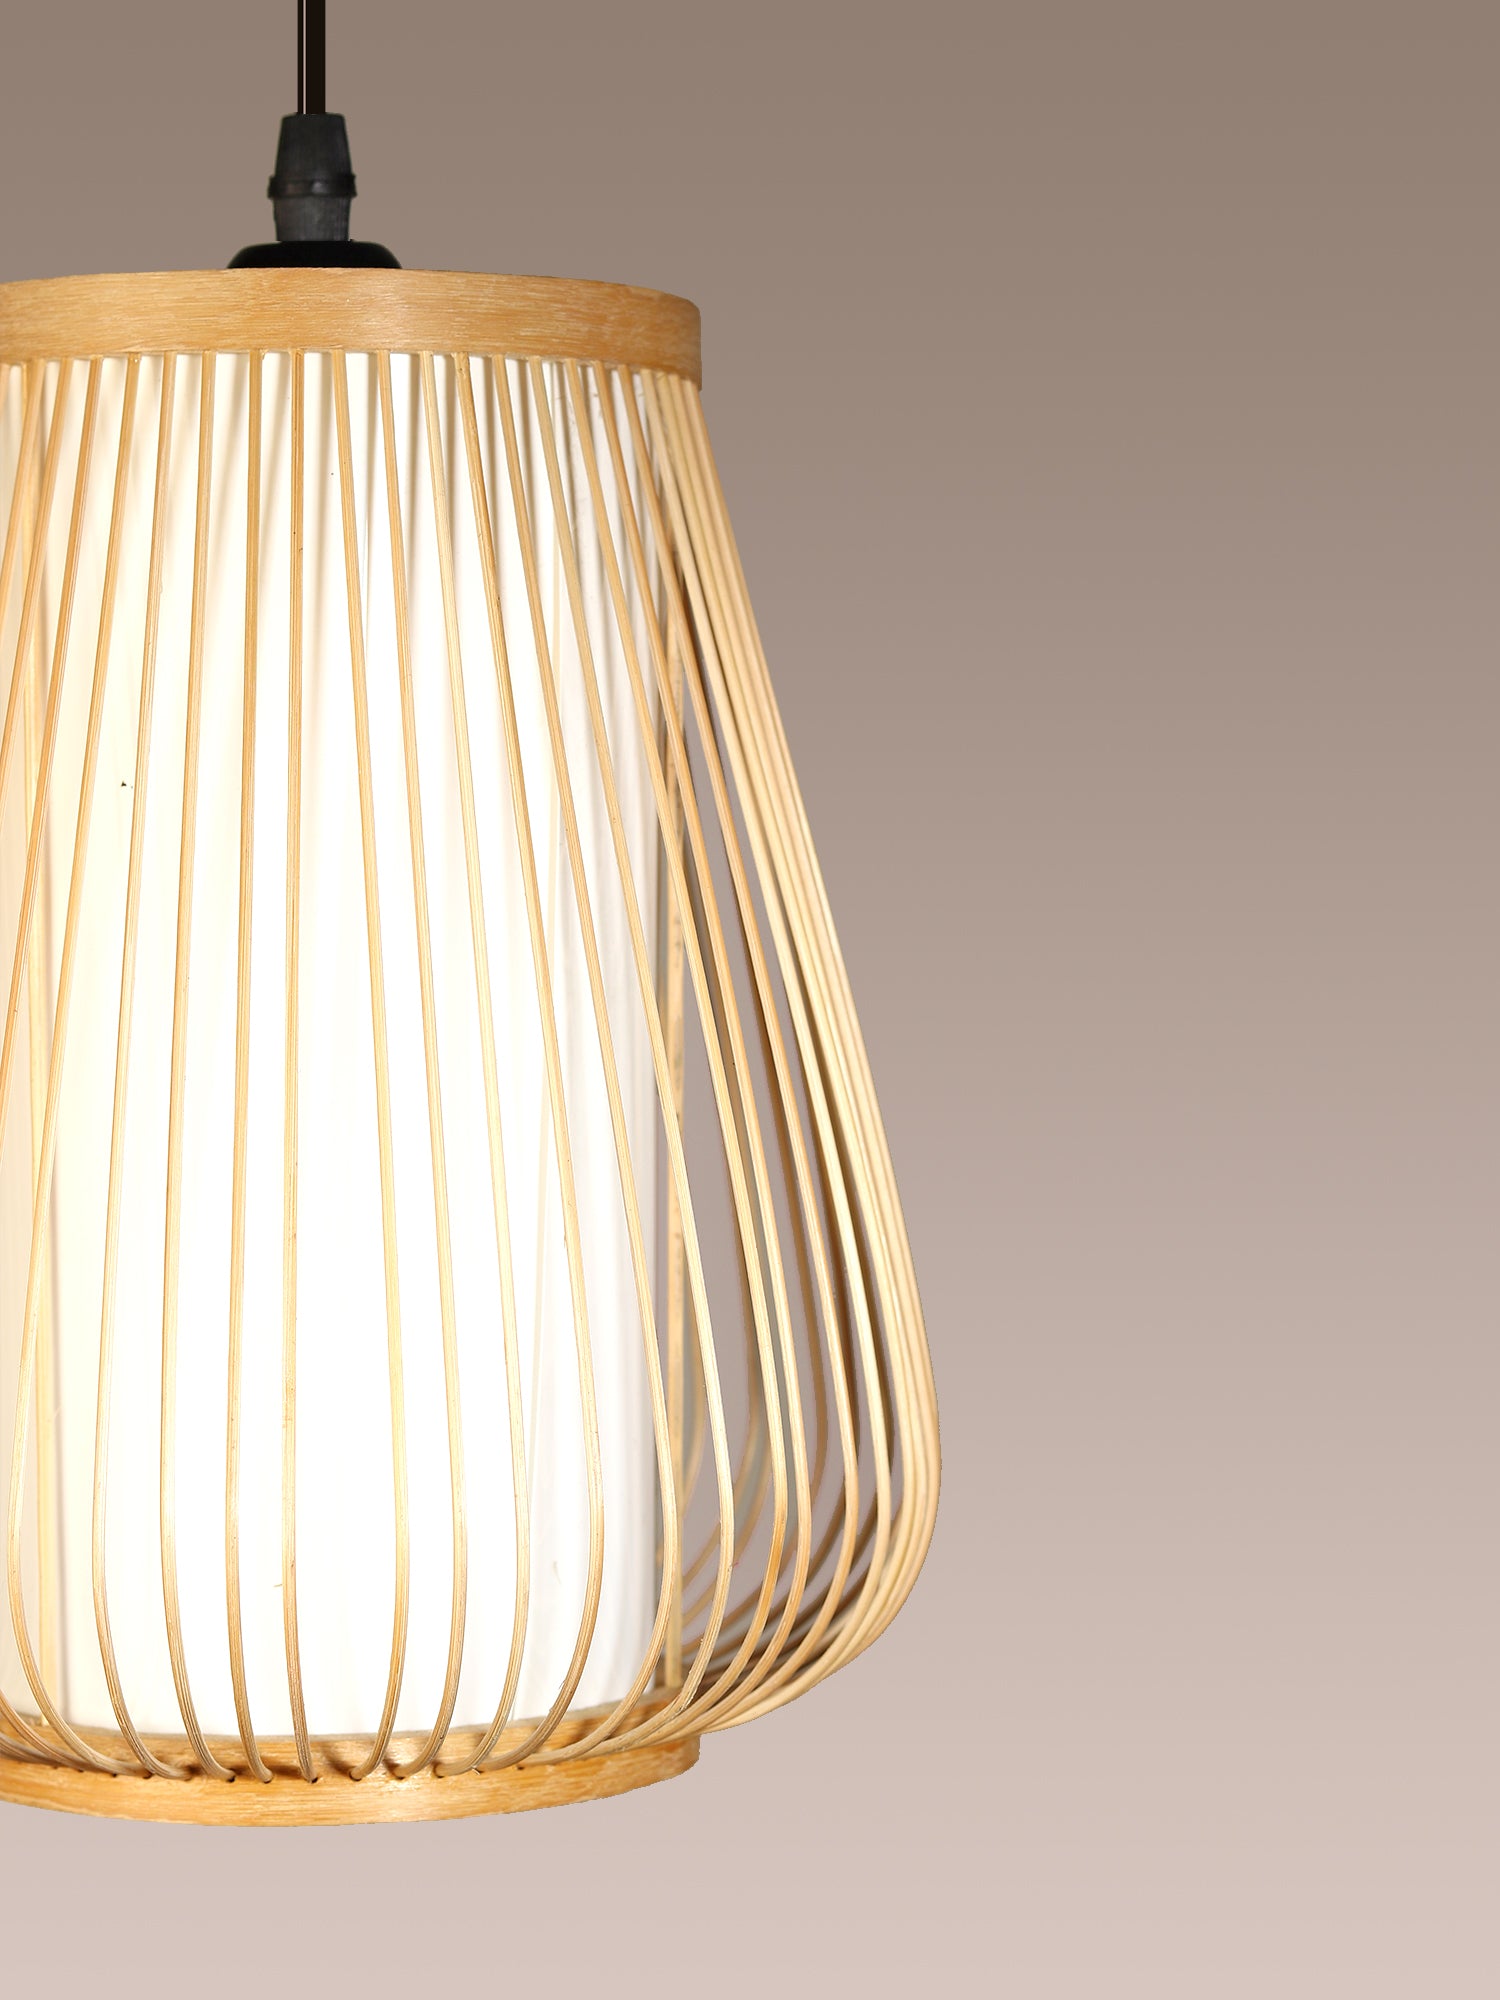 Buy Bamboo Lamps